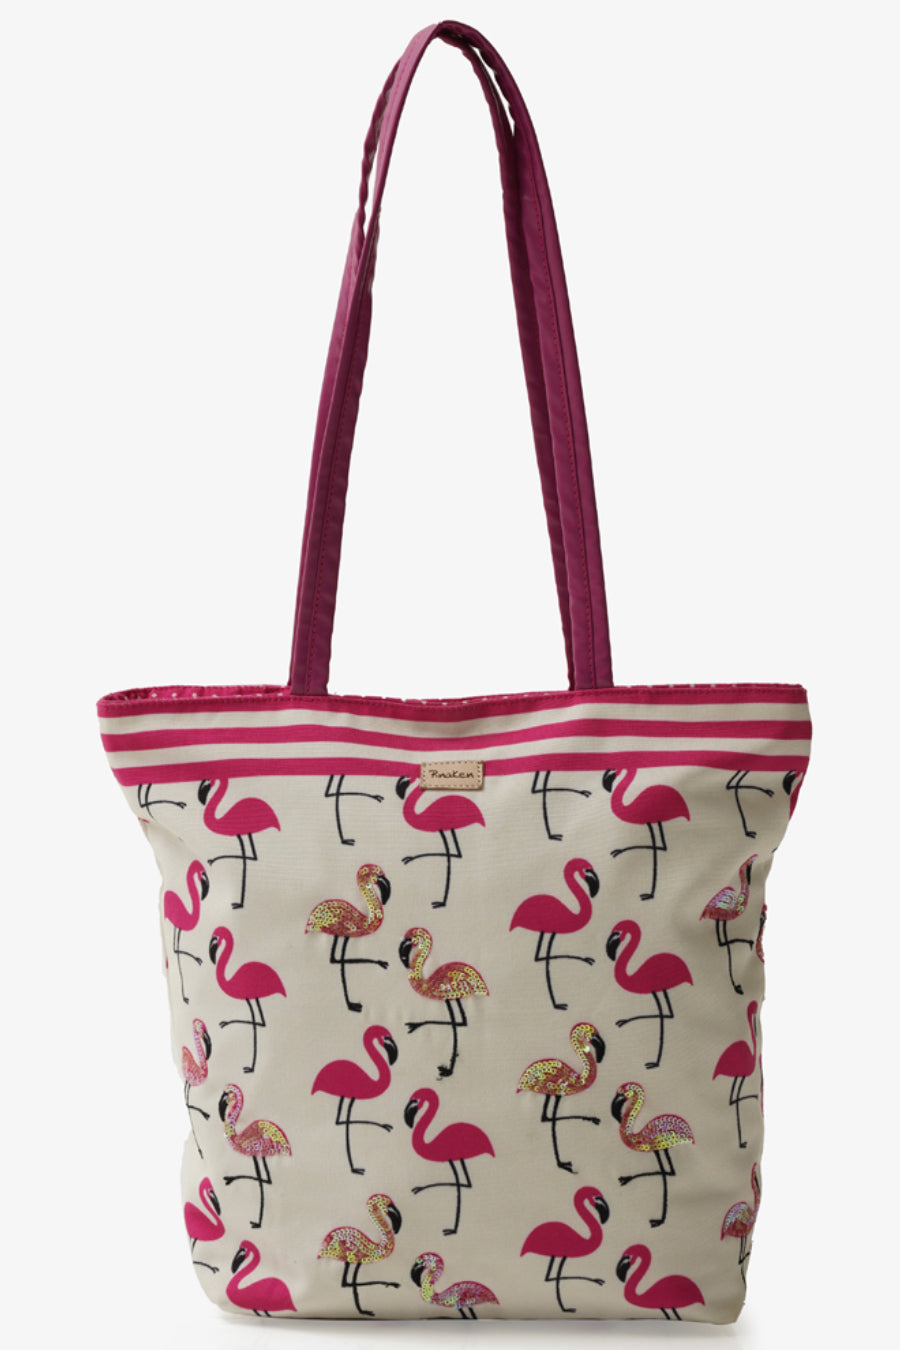 Pink Handbag - Buy Pink Handbag online in India